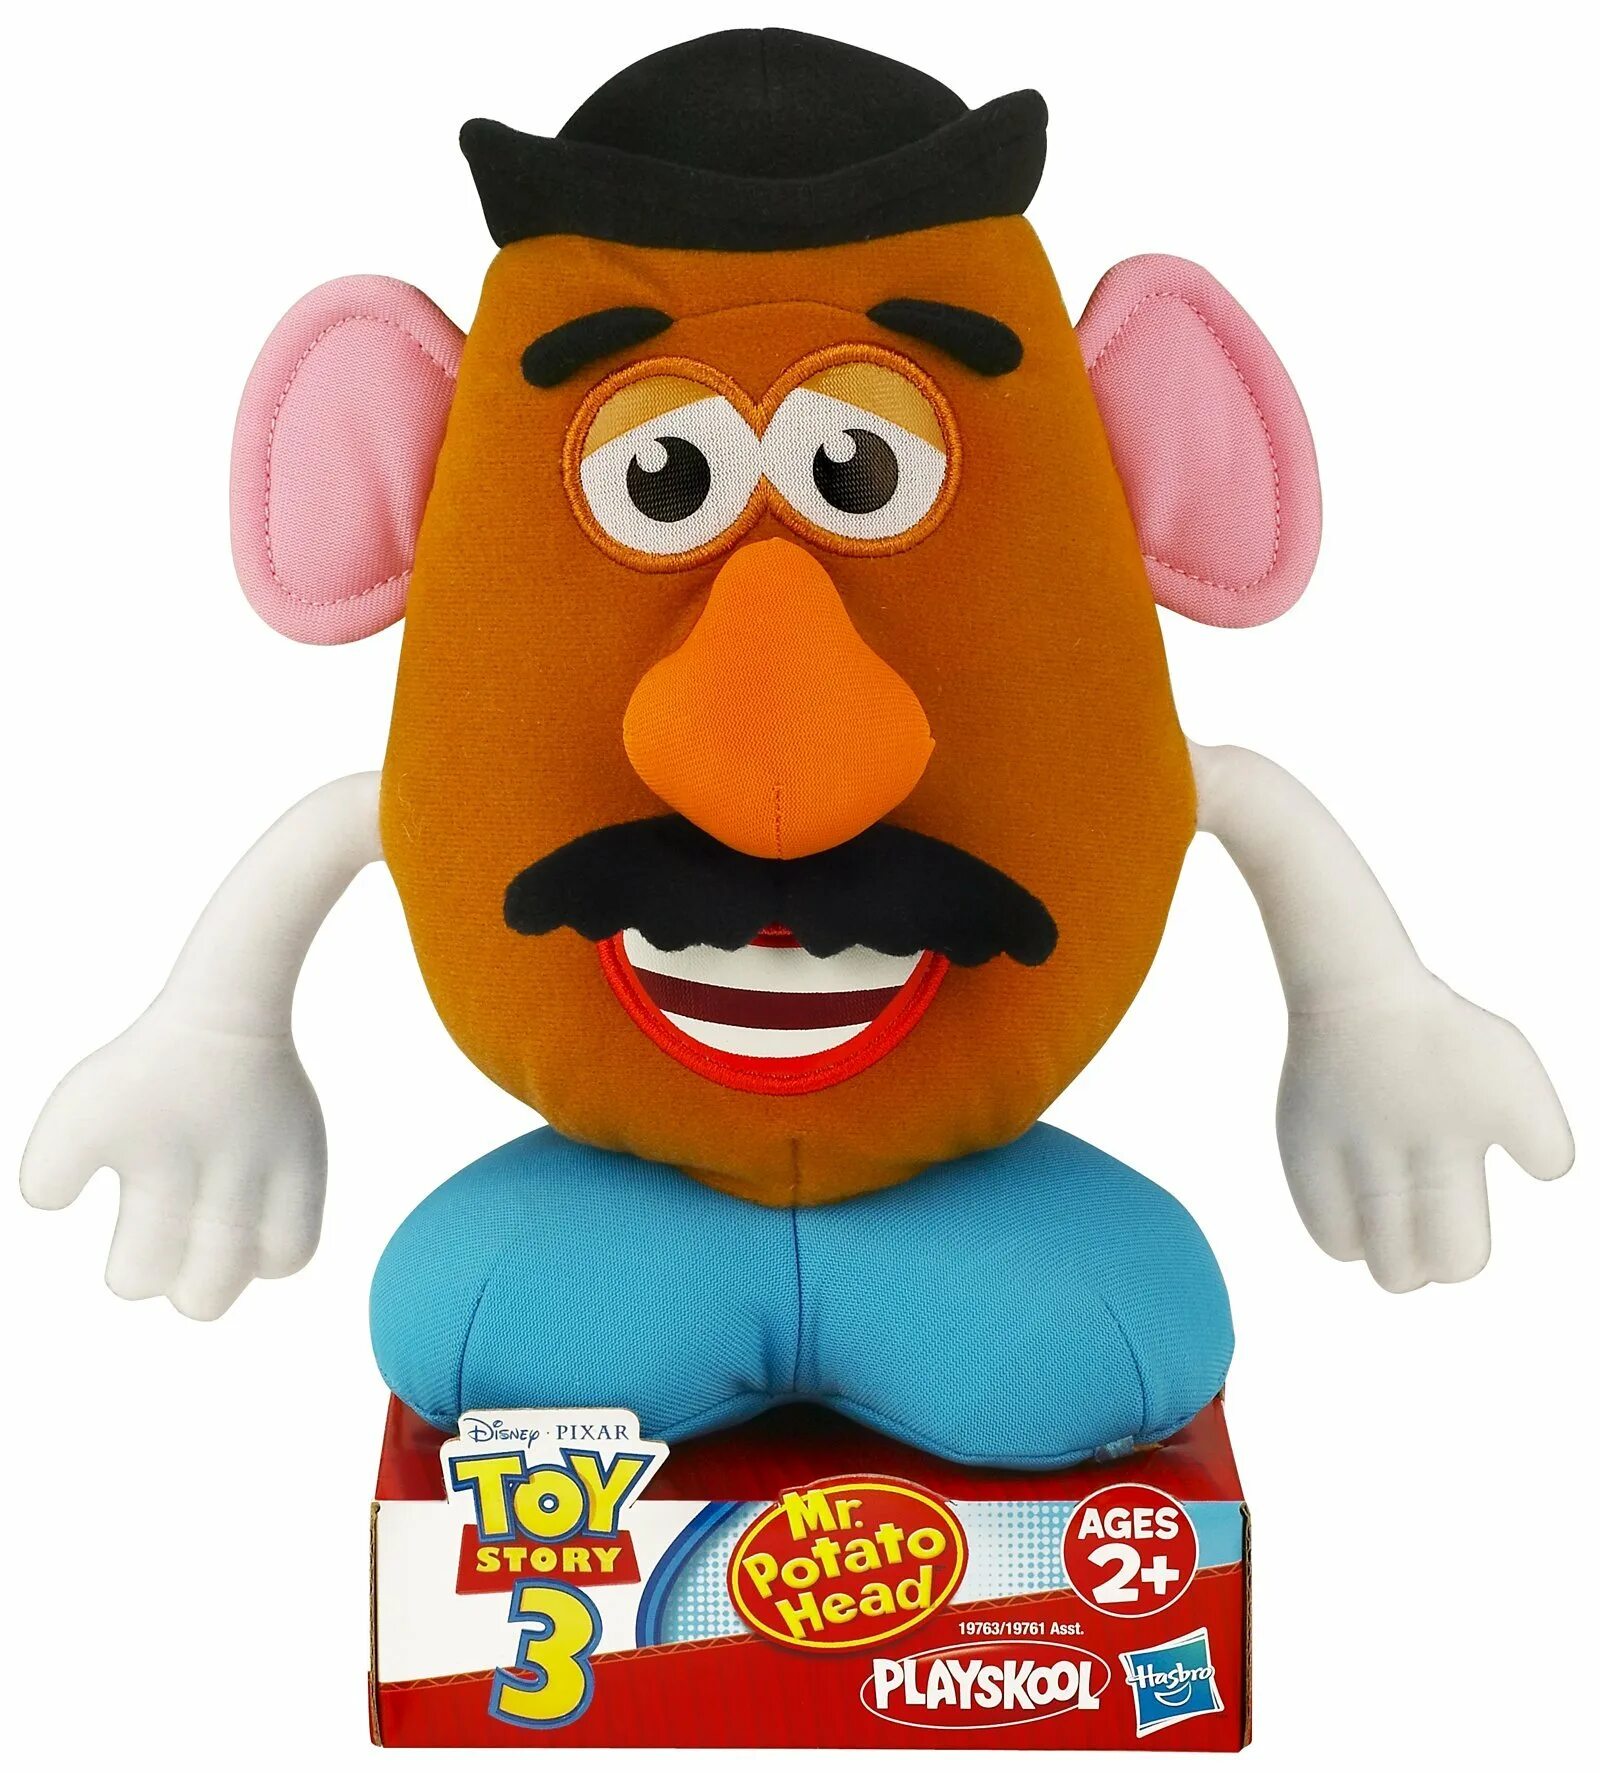 Купить головы игрушек. Mr Potato head игрушка. Мистер картофельная голова (Mr. Potato head) история игрушек 3, Hasbro 2010. Toy story Playskool. Toy story Playskool игрушка.